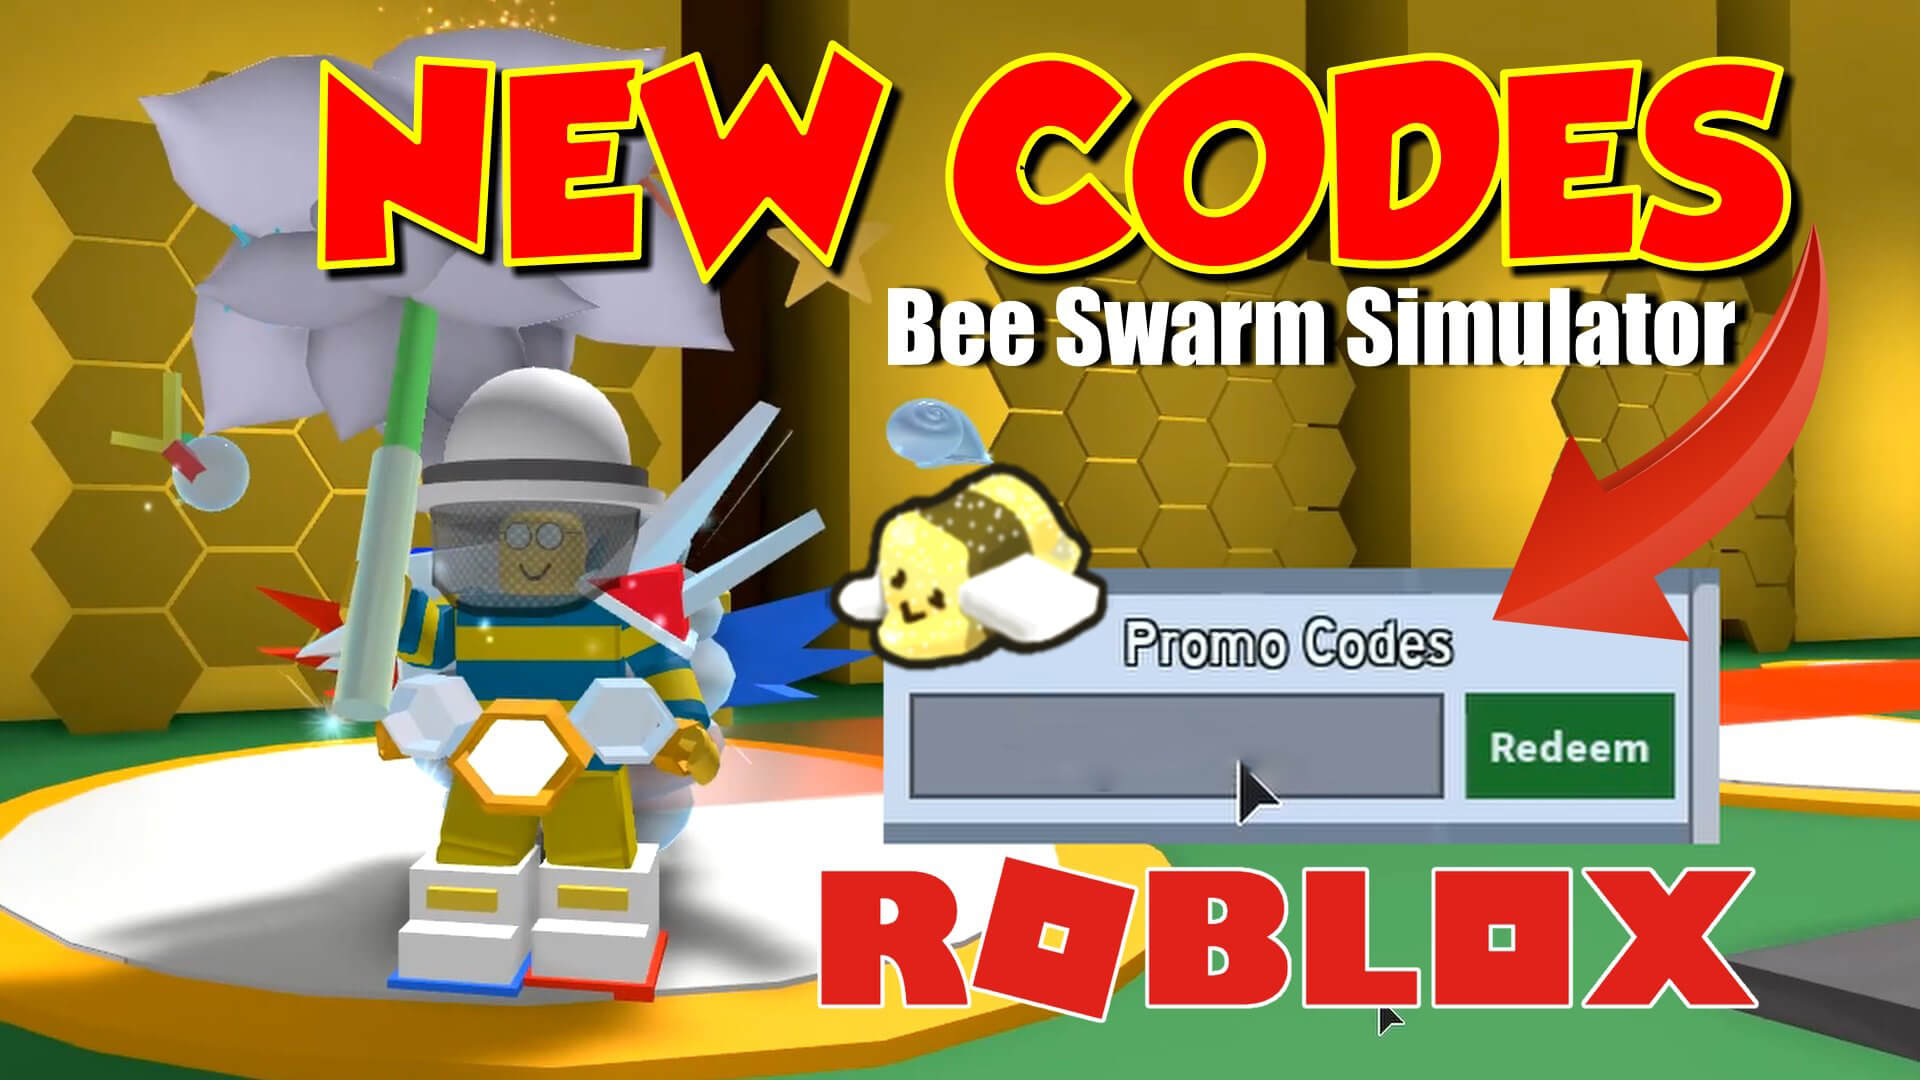 Roblox Bee Swarm Simulator Codes January 2022 - How Do I Redeem Bee Swarm Simulator Codes